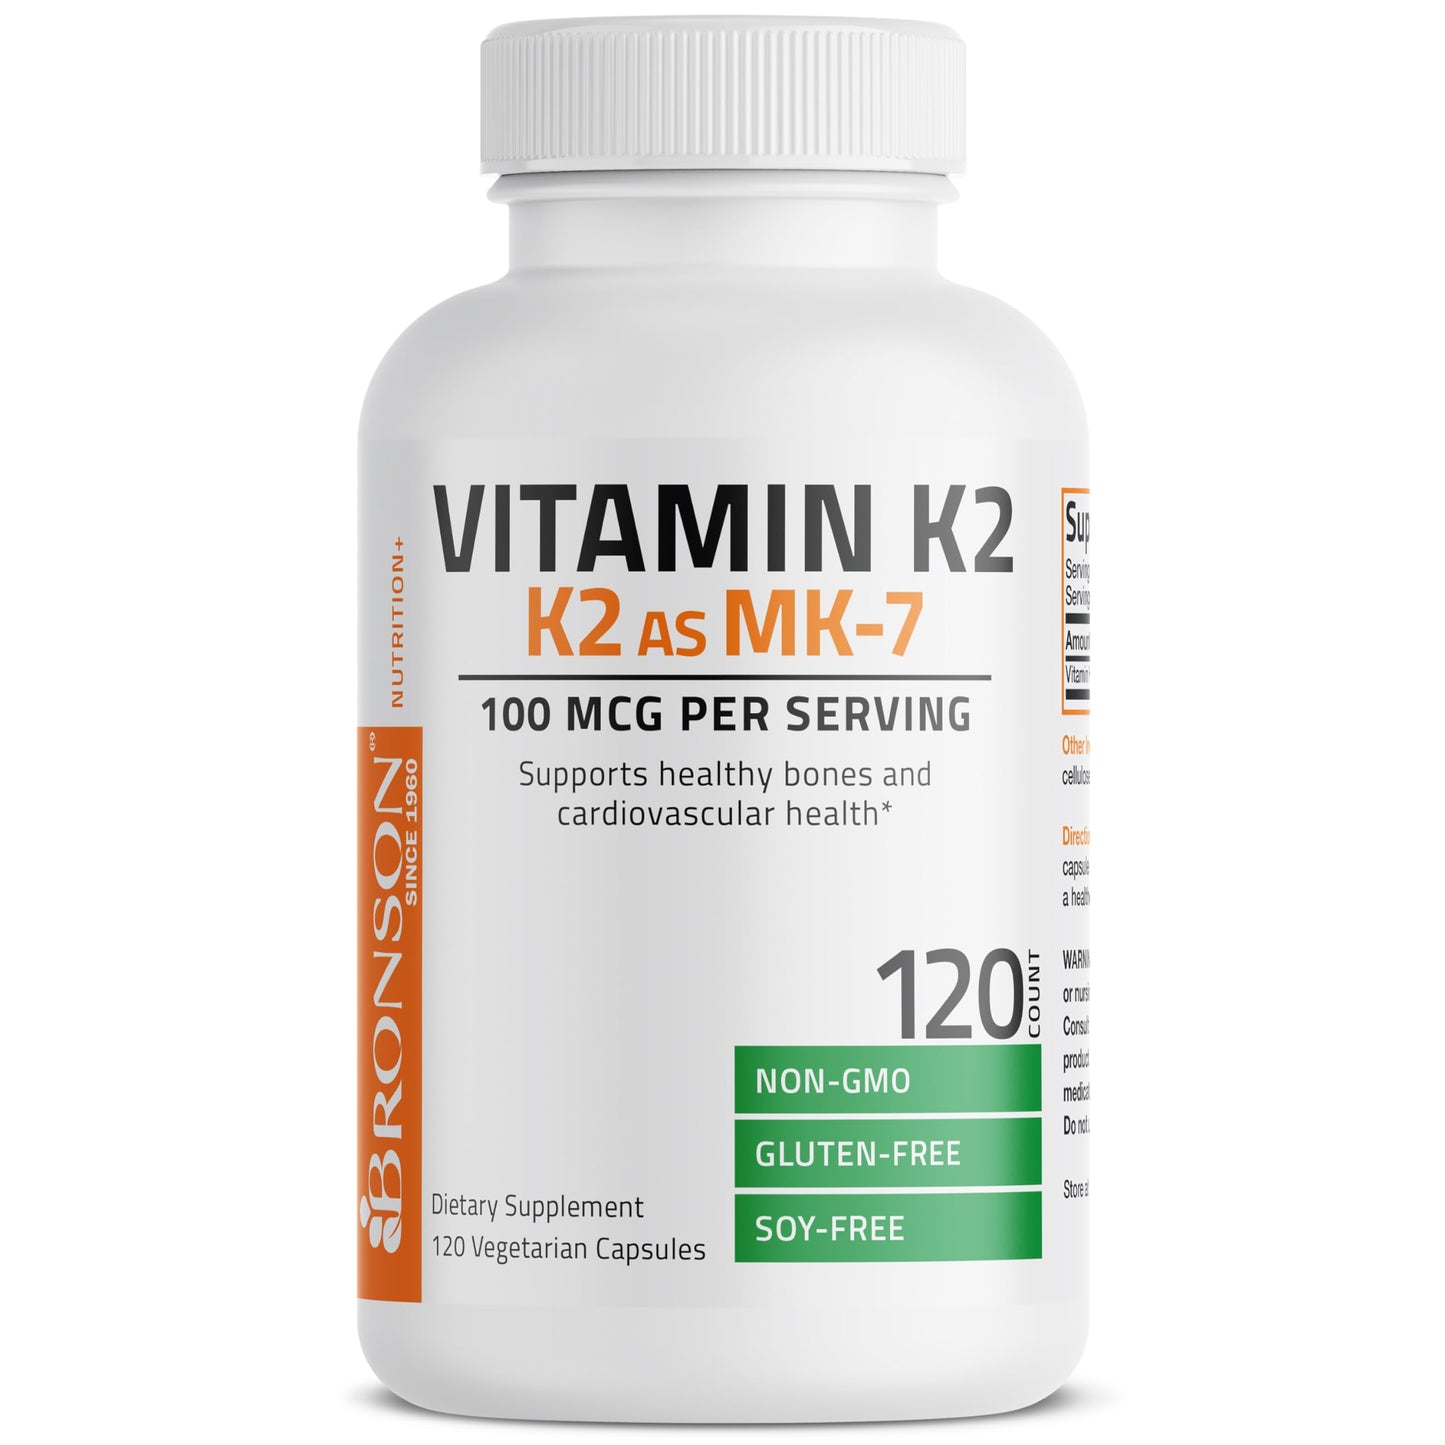 Vitamin K2 MK-7 - 100 mcg